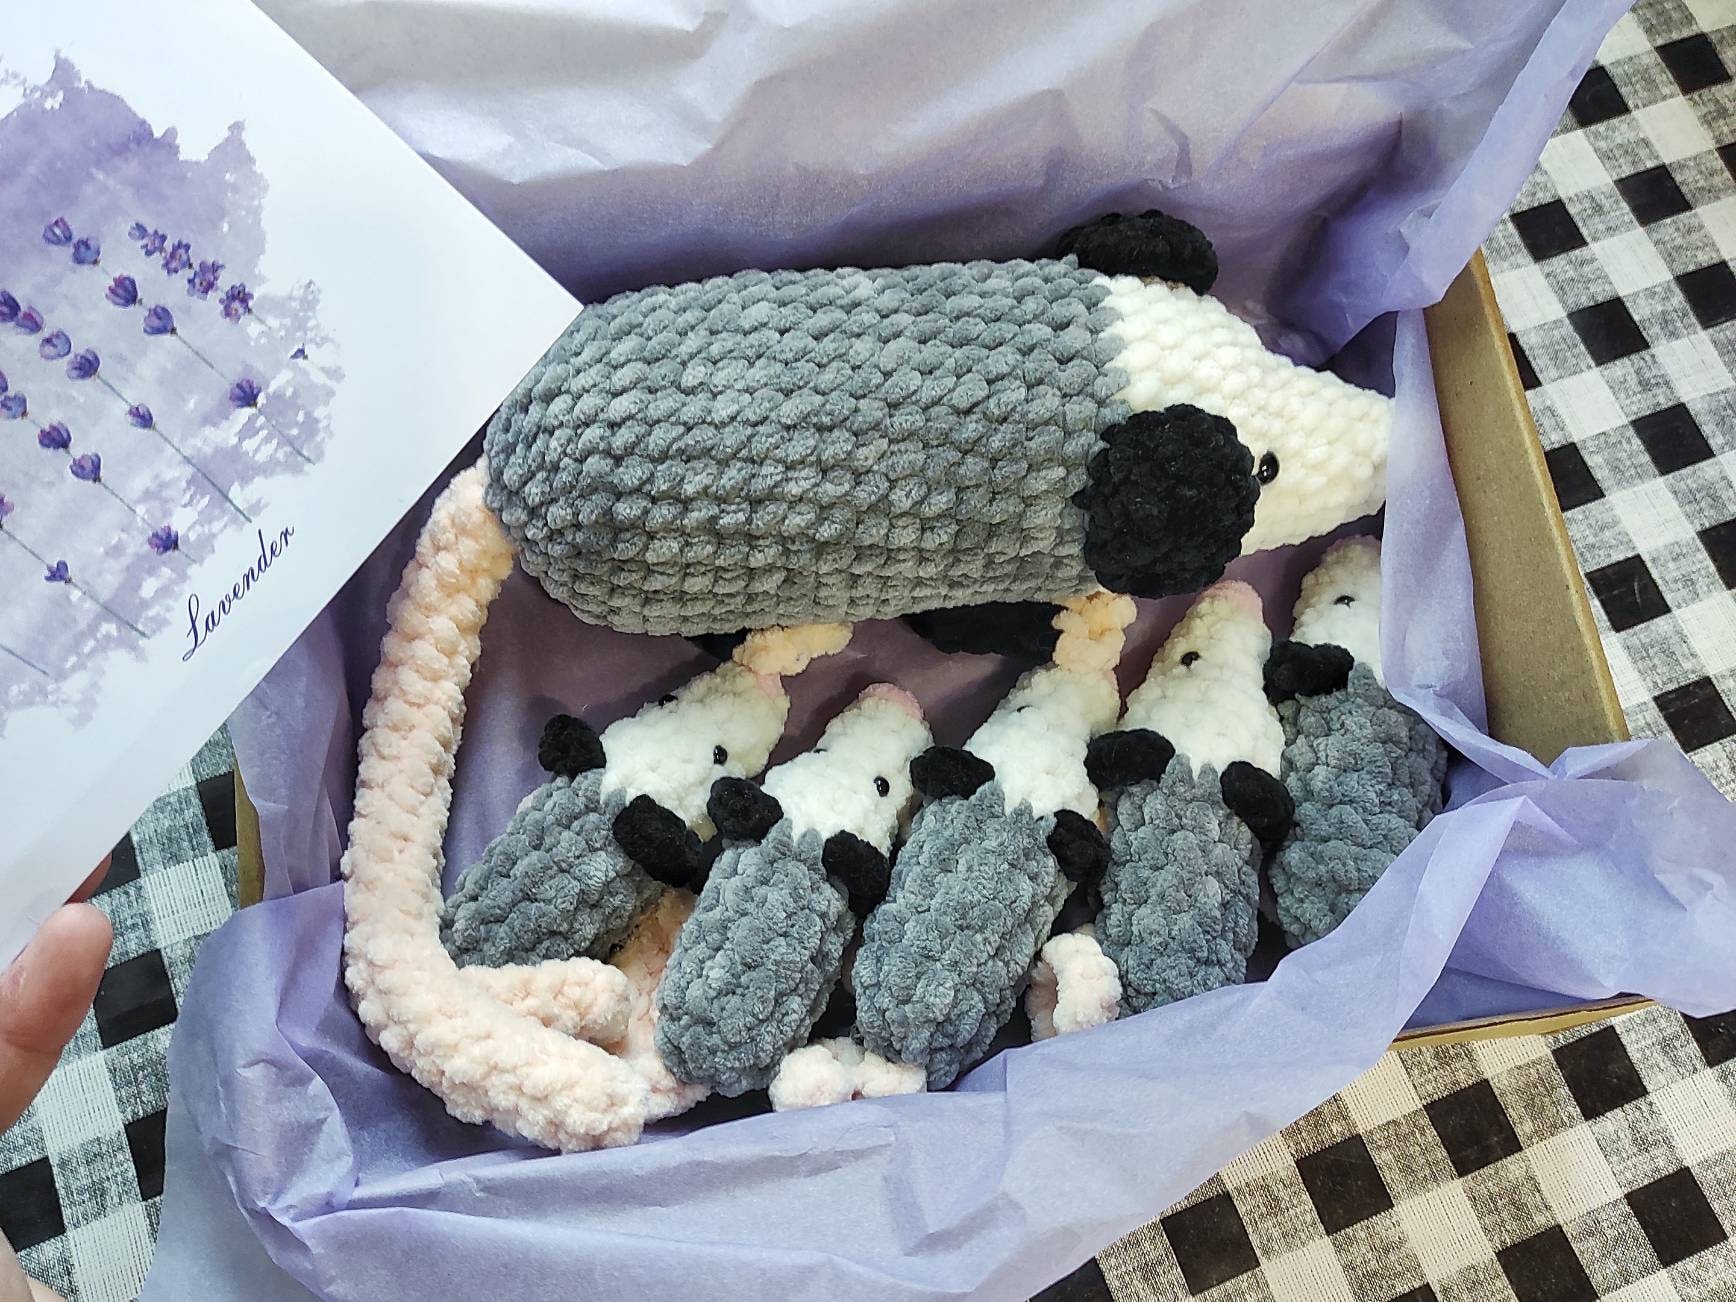 Opossum Stuffed Animal Crochet Kit-STP-87B70